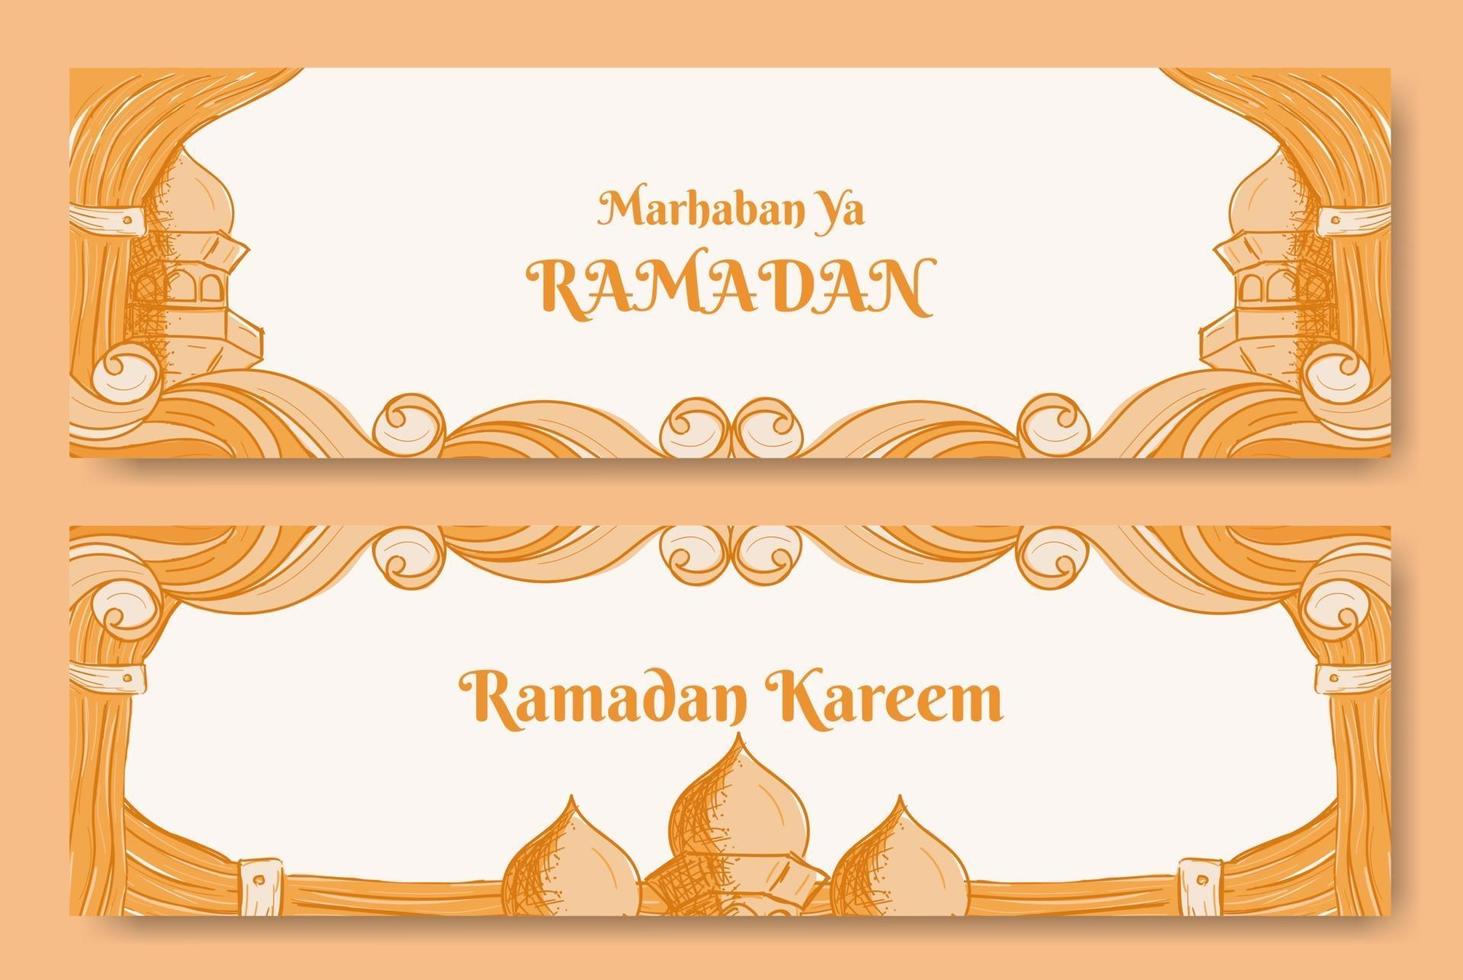 Ramadan kareem banner design with hand drawn illustration of Islamic ornament vector